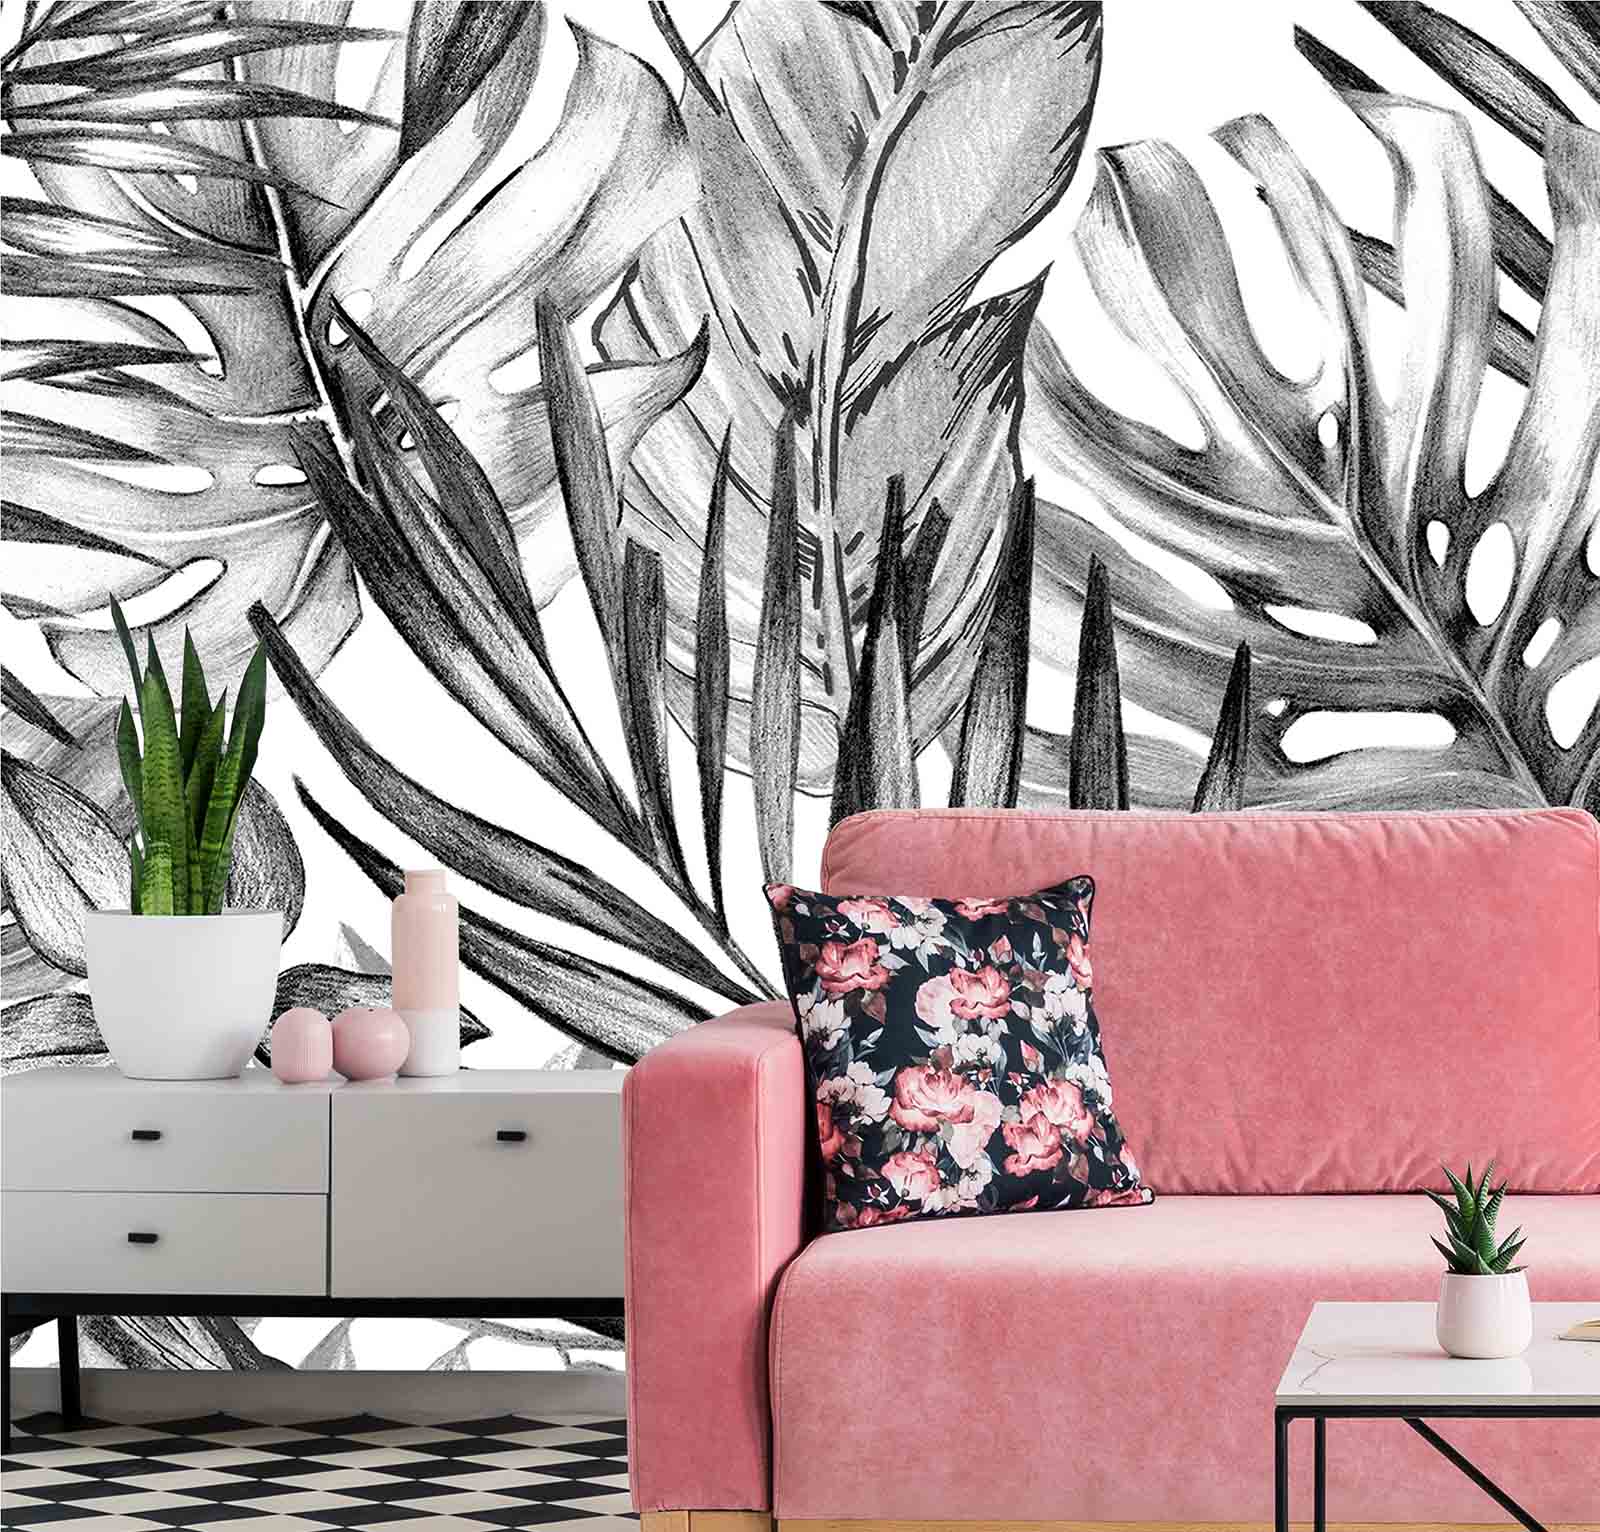 Wallpaper Mural Tropical Plants in Black and White | Muralunique